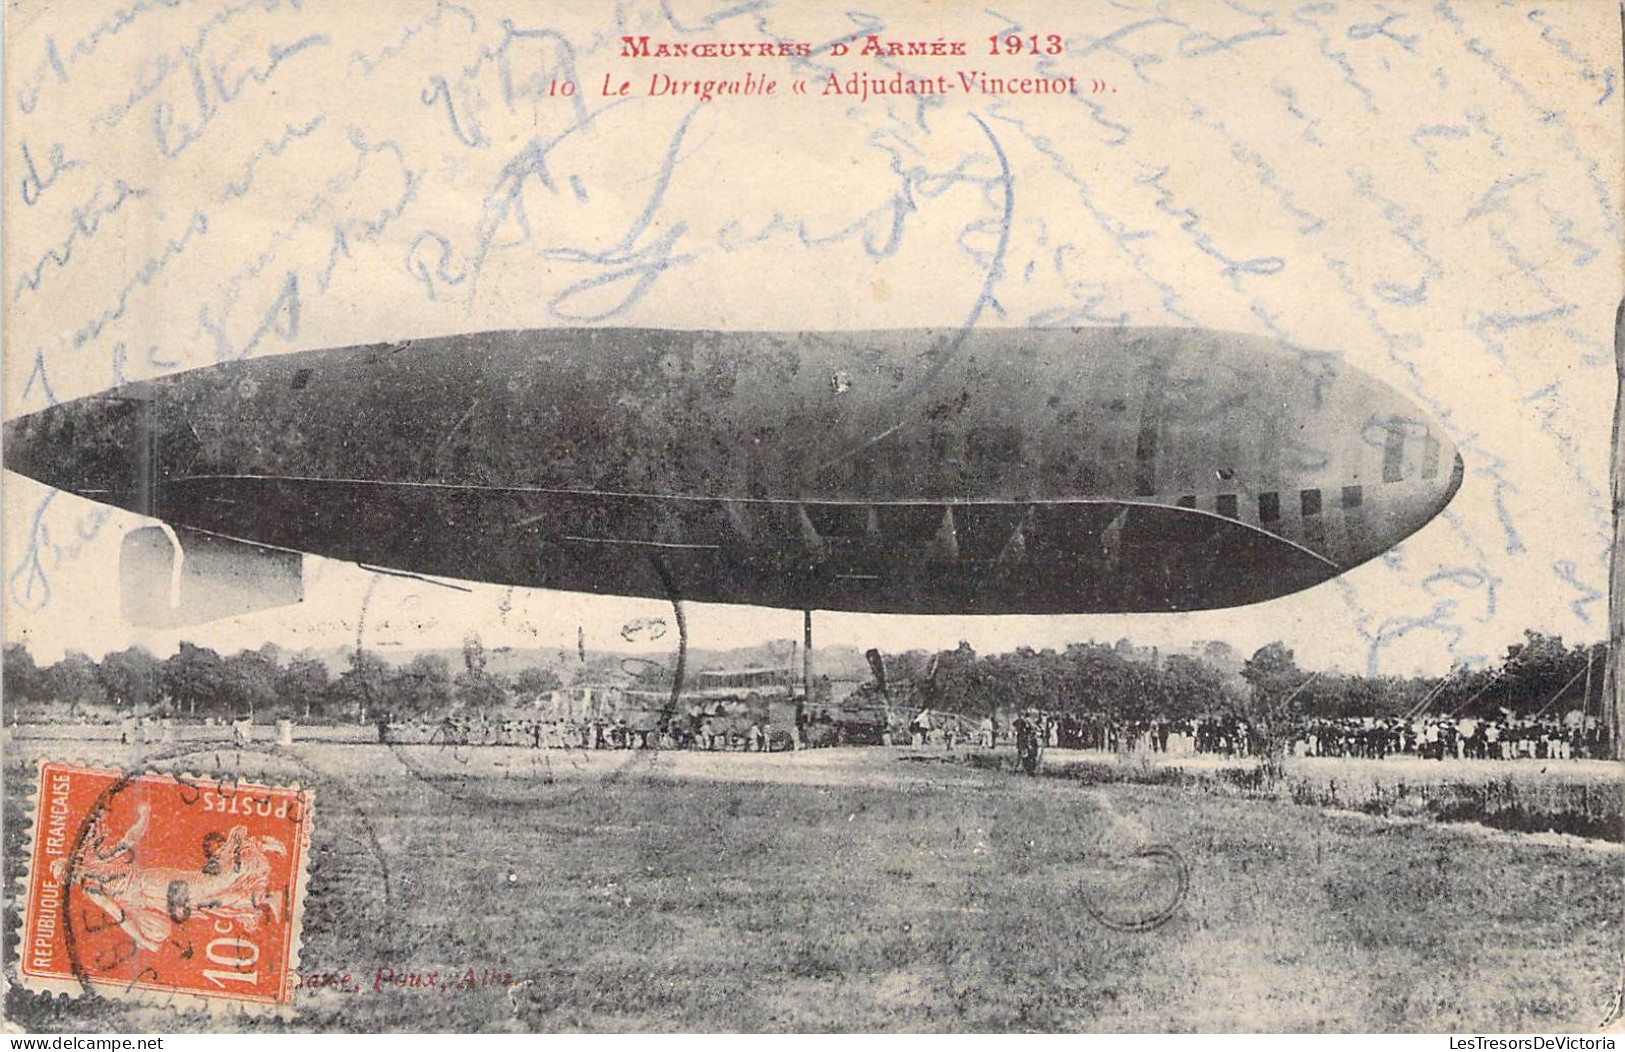 MANOEUVRES - Manoeuvre D'armée 1913 - Le Dirigeable " Adjudant Vincenot" - Carte Postale Ancienne - Manoeuvres